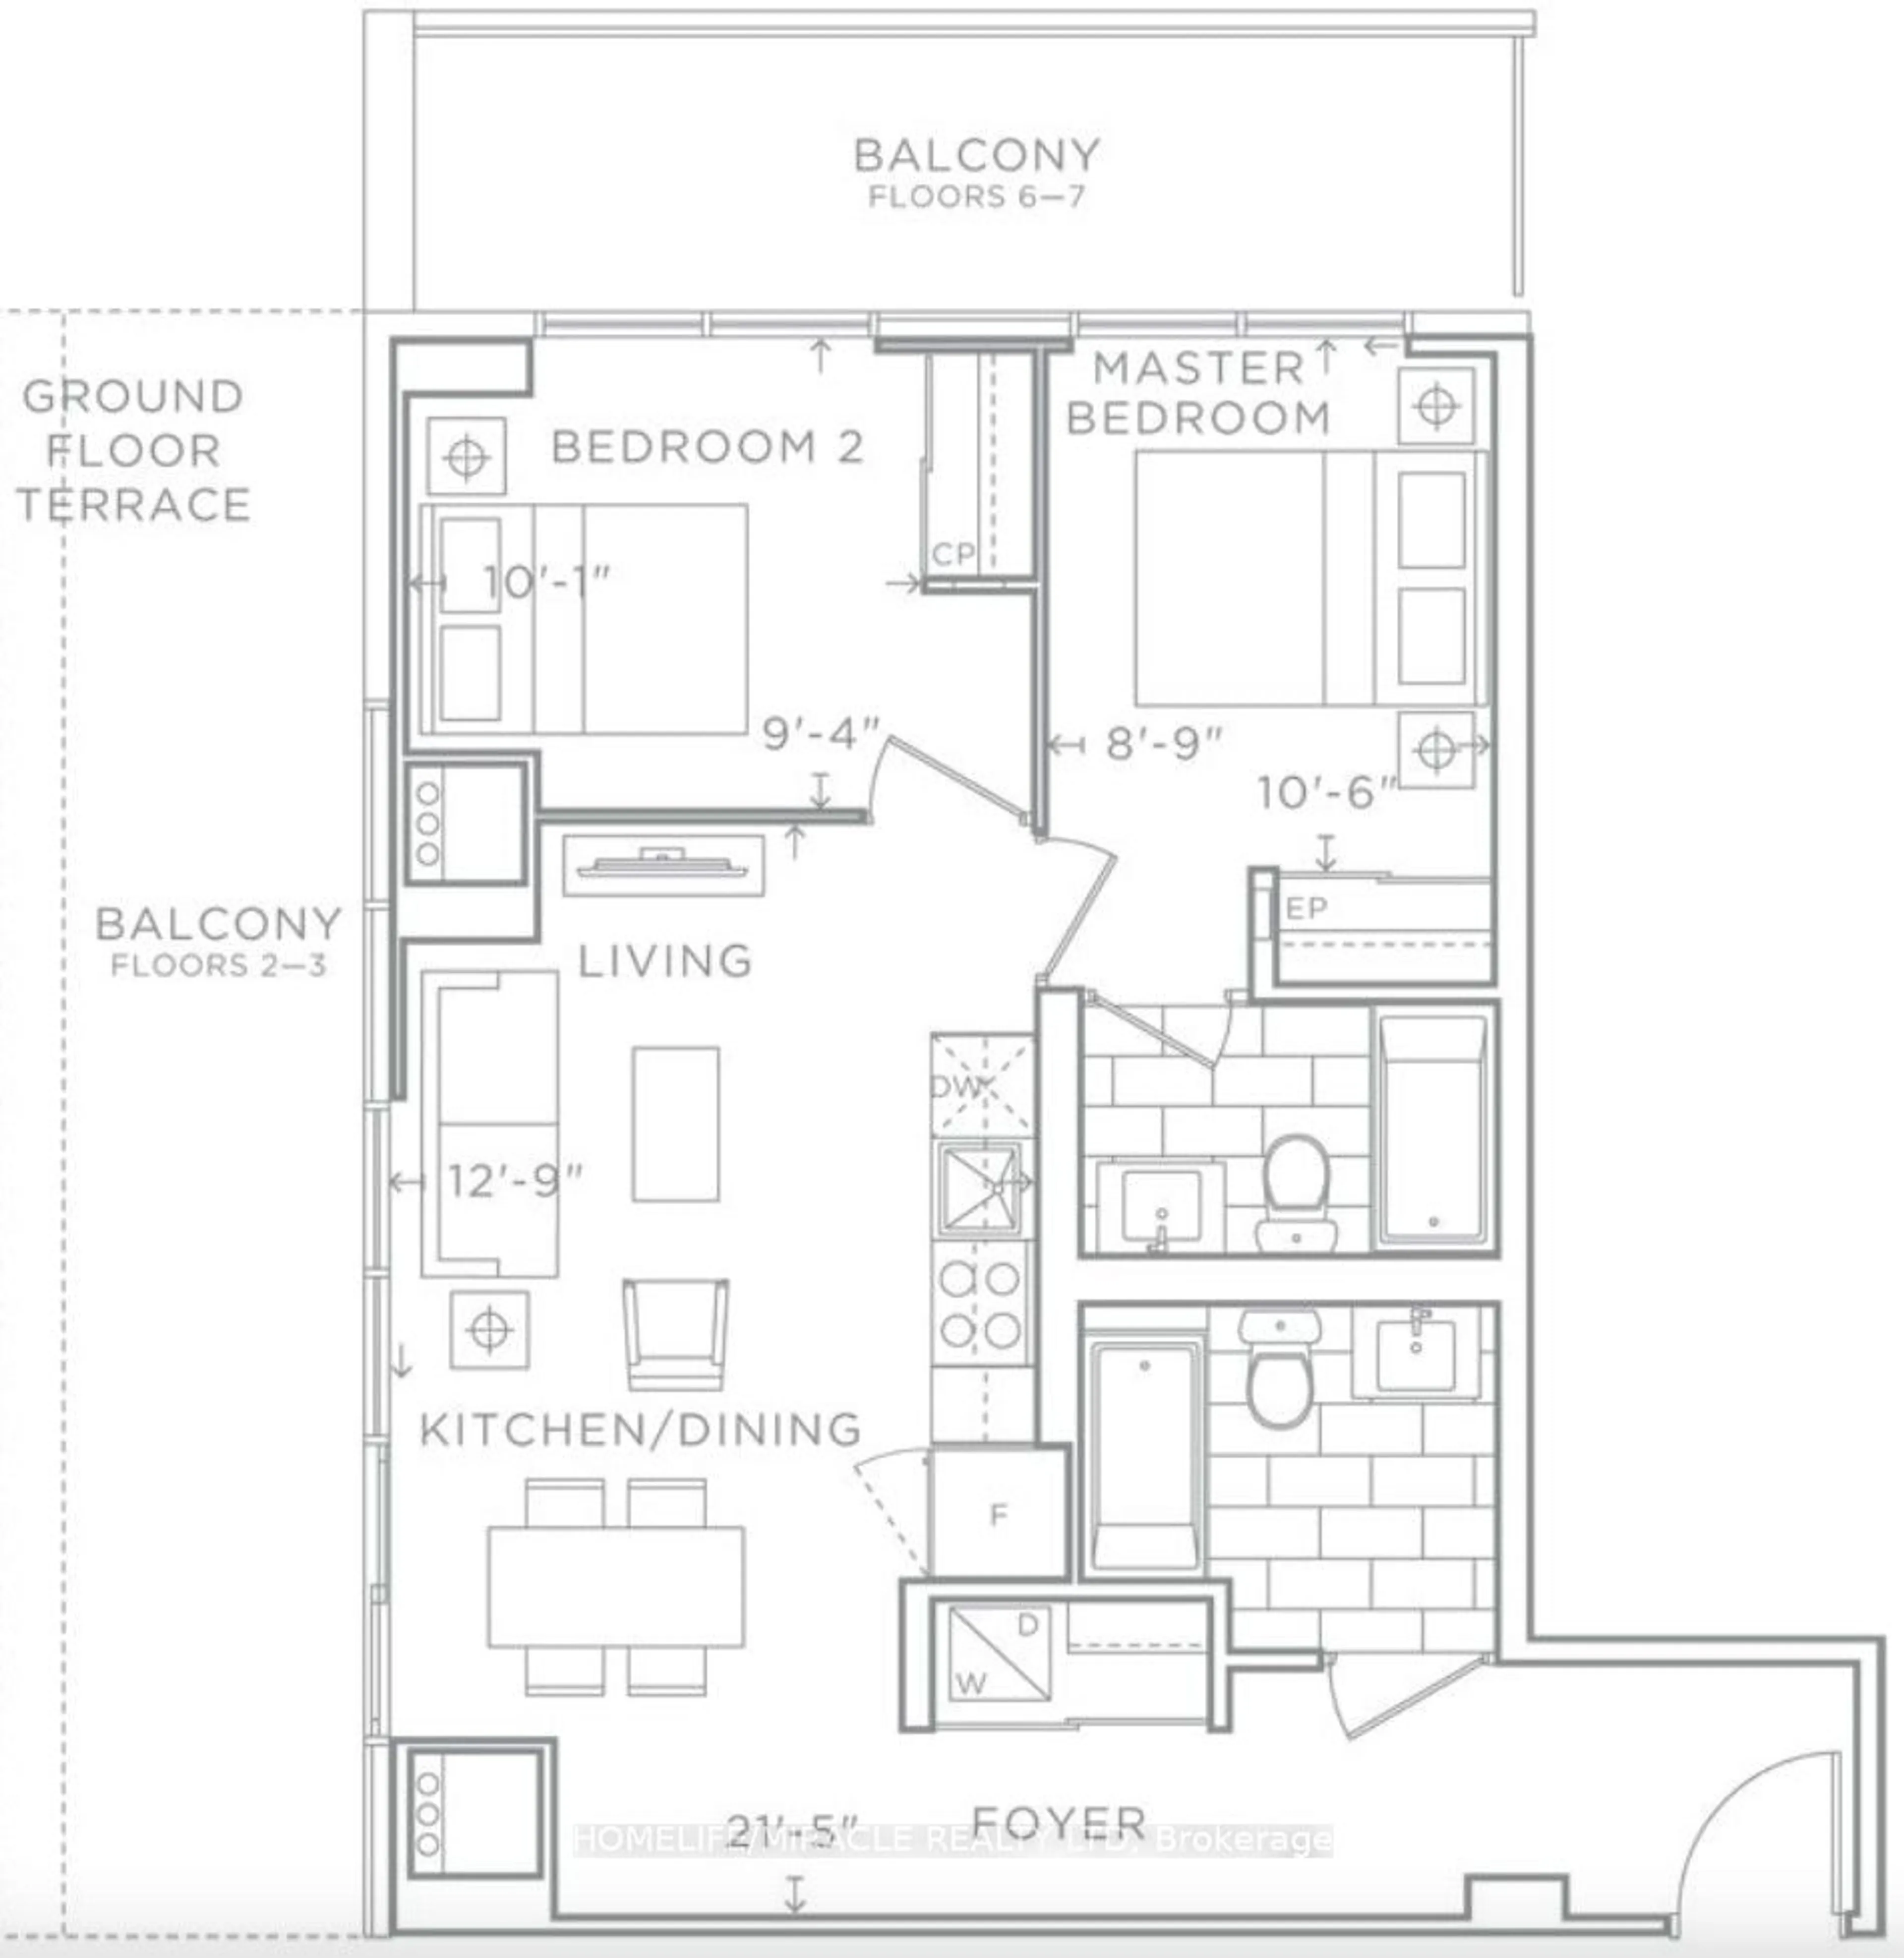 Floor plan for 3210 Dakota Common #A607, Burlington Ontario L7M 2A6